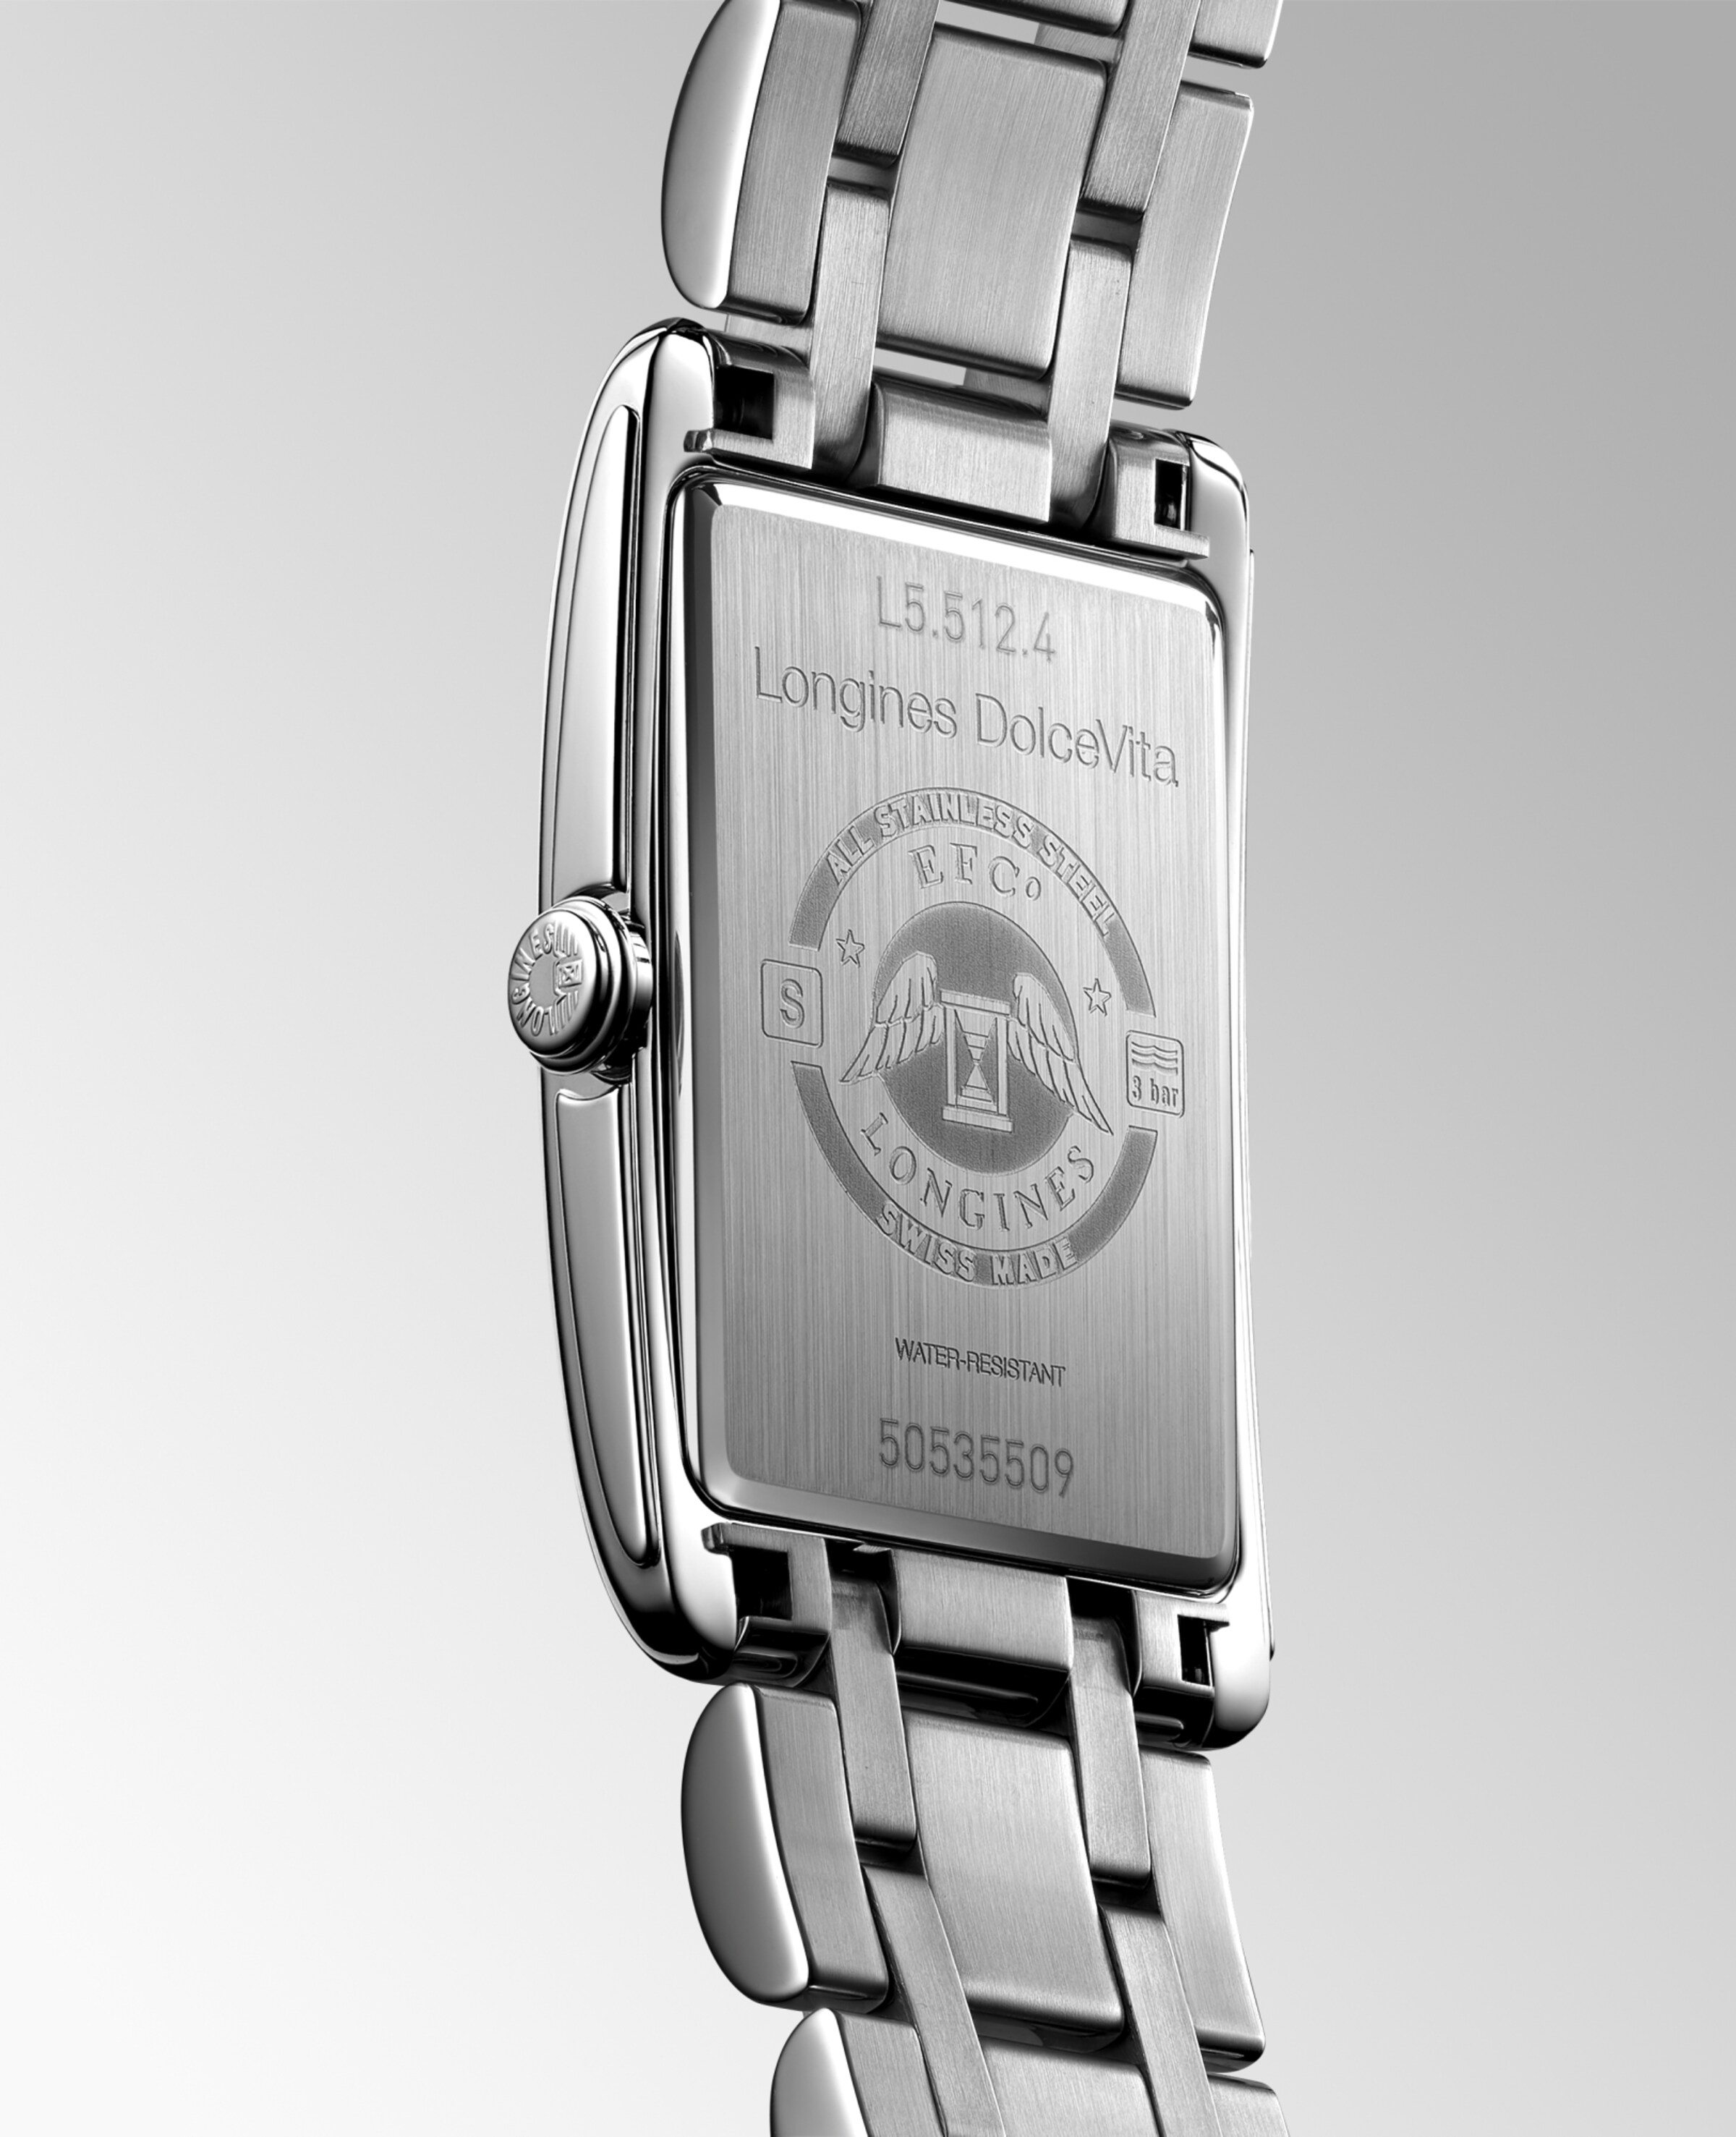 Longines DOLCEVITA Quartz Stainless steel Watch - L5.512.4.11.6